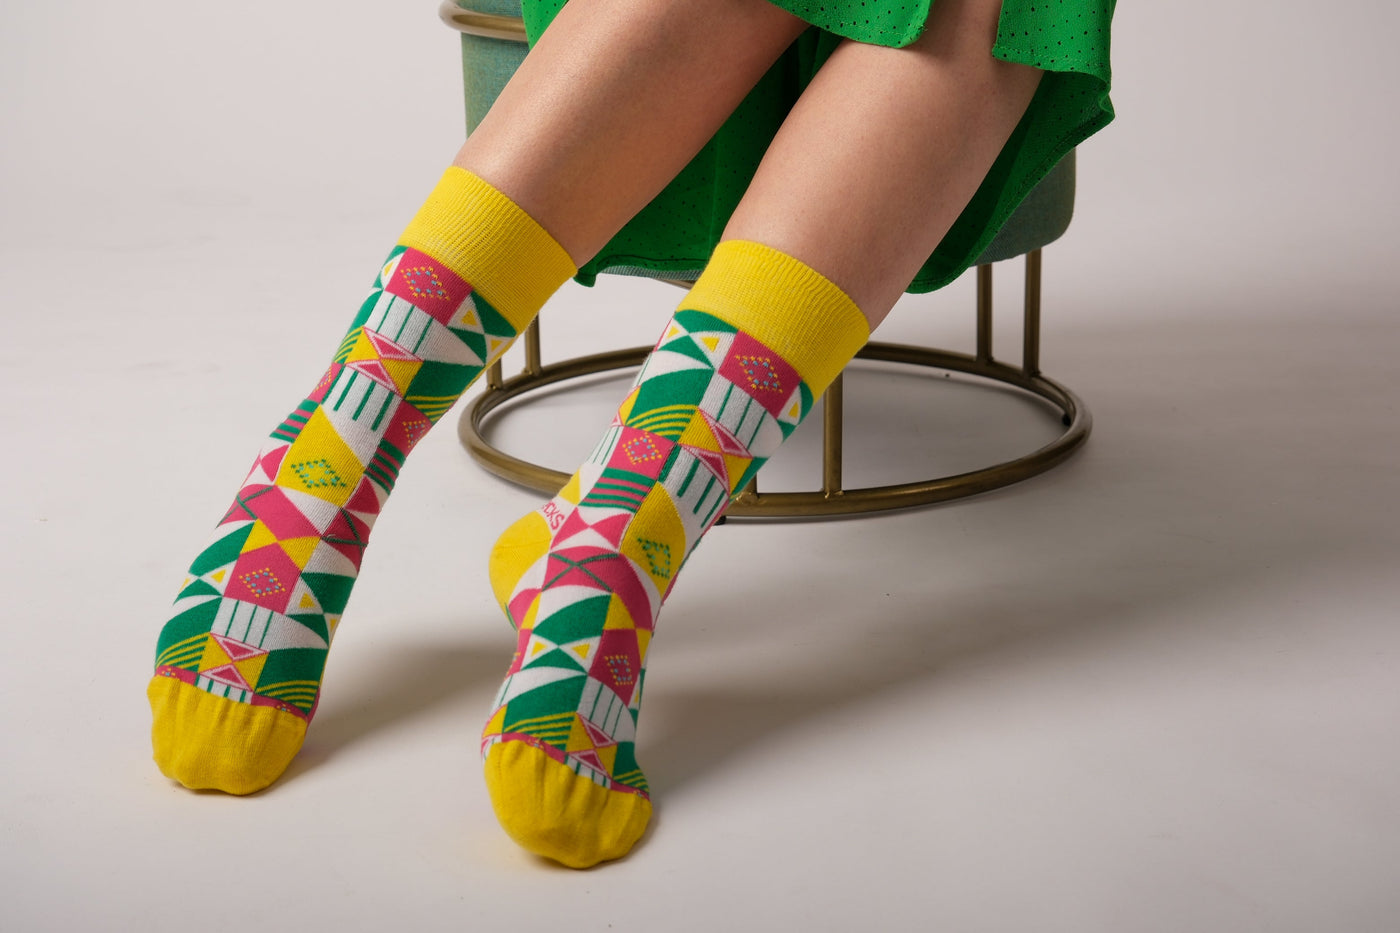 2 Pack Yellow and Green Geometric Socks